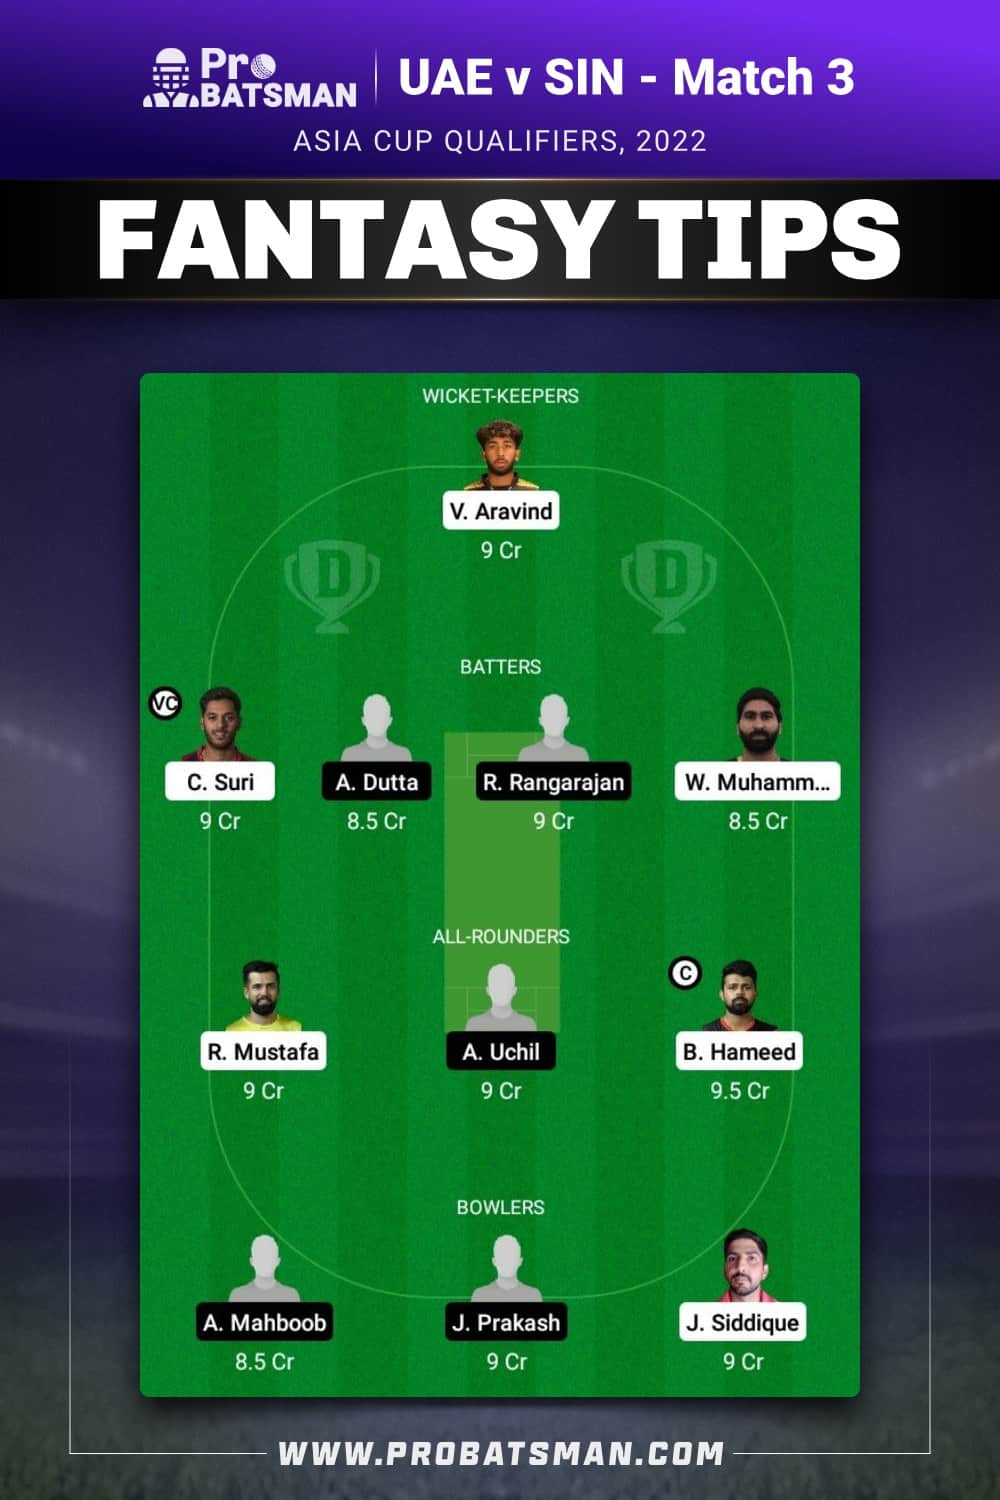 UAE vs SIN Dream11 Prediction - Fantasy Team 1